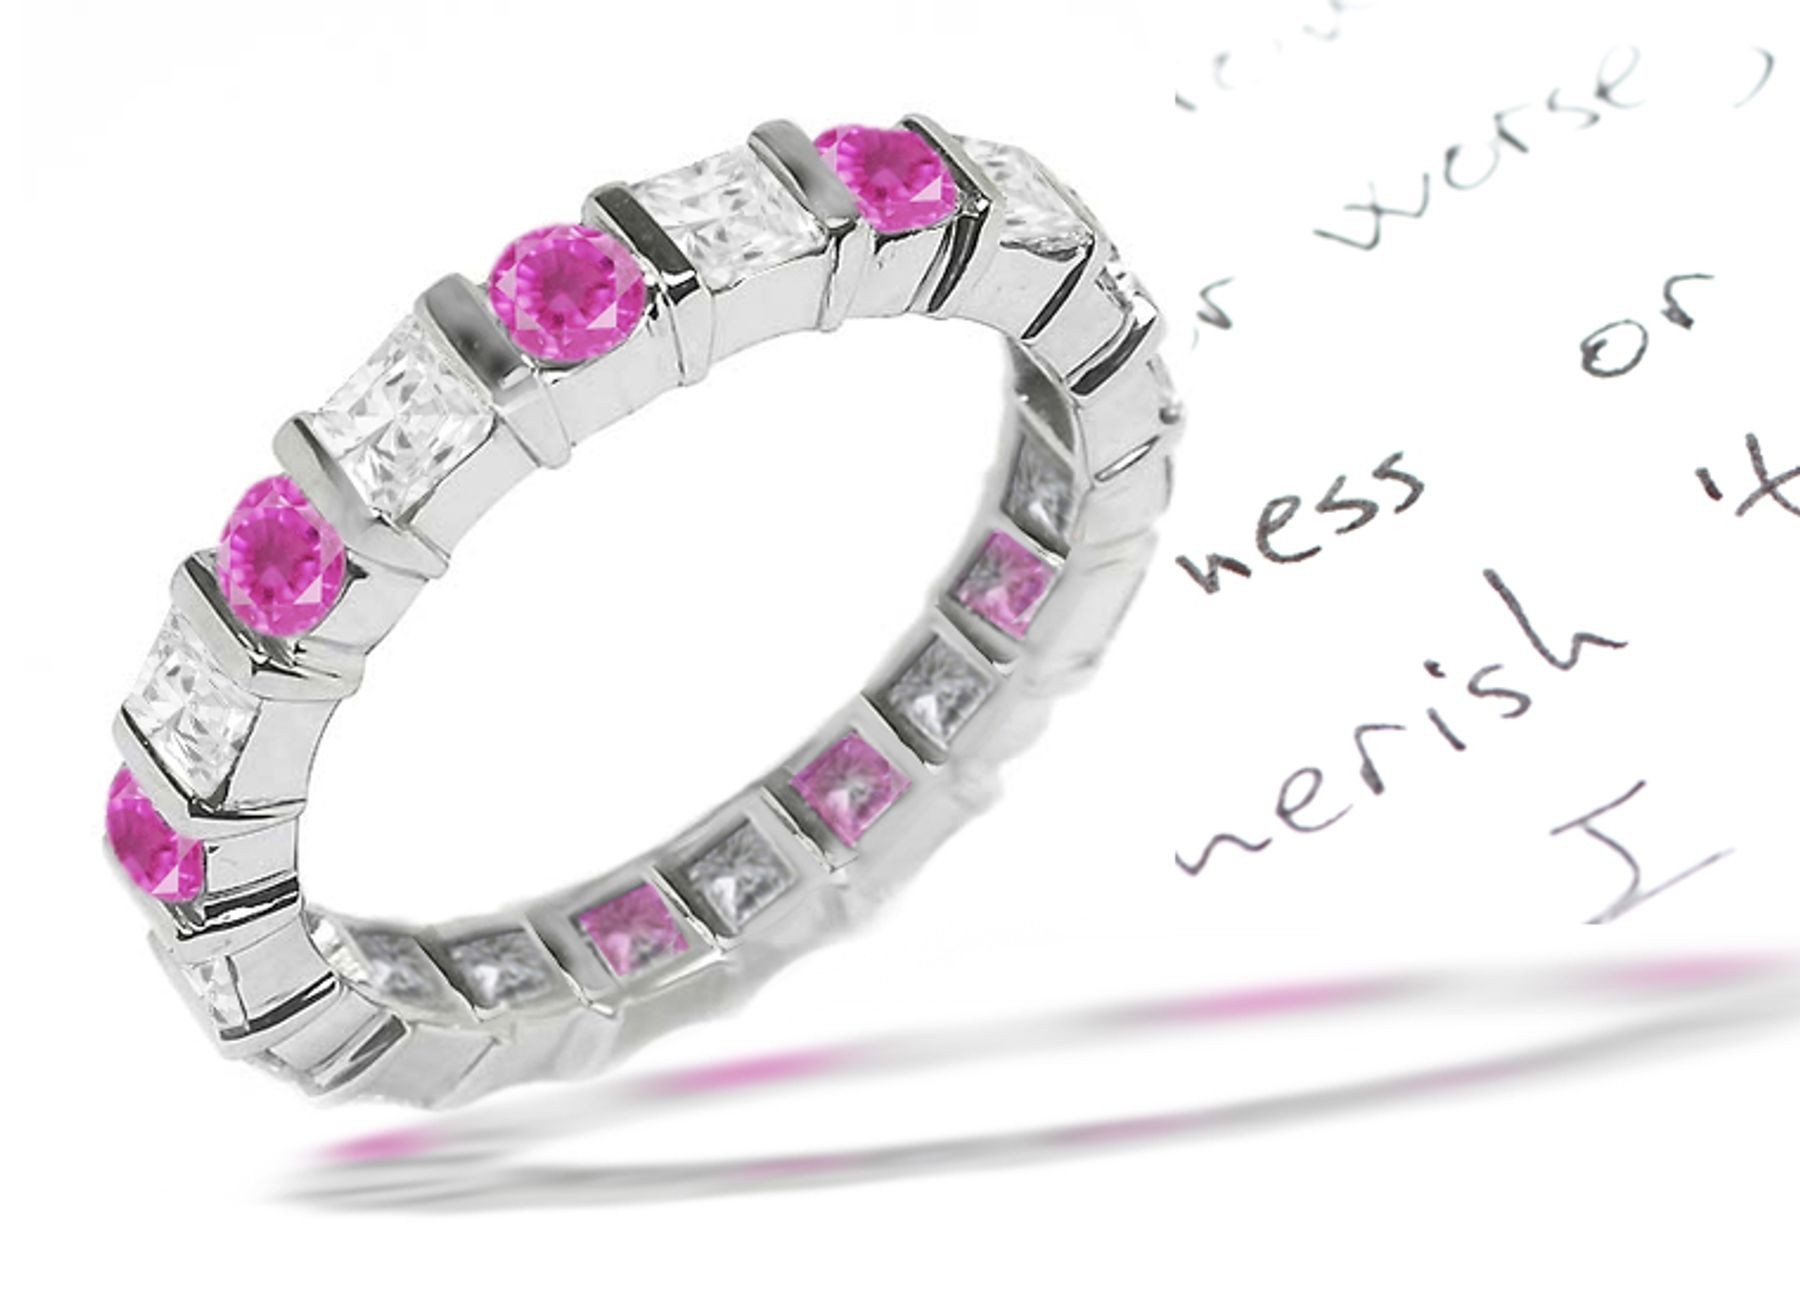 Impeccable Diamond Women's Pink Sapphire Eternity Rings